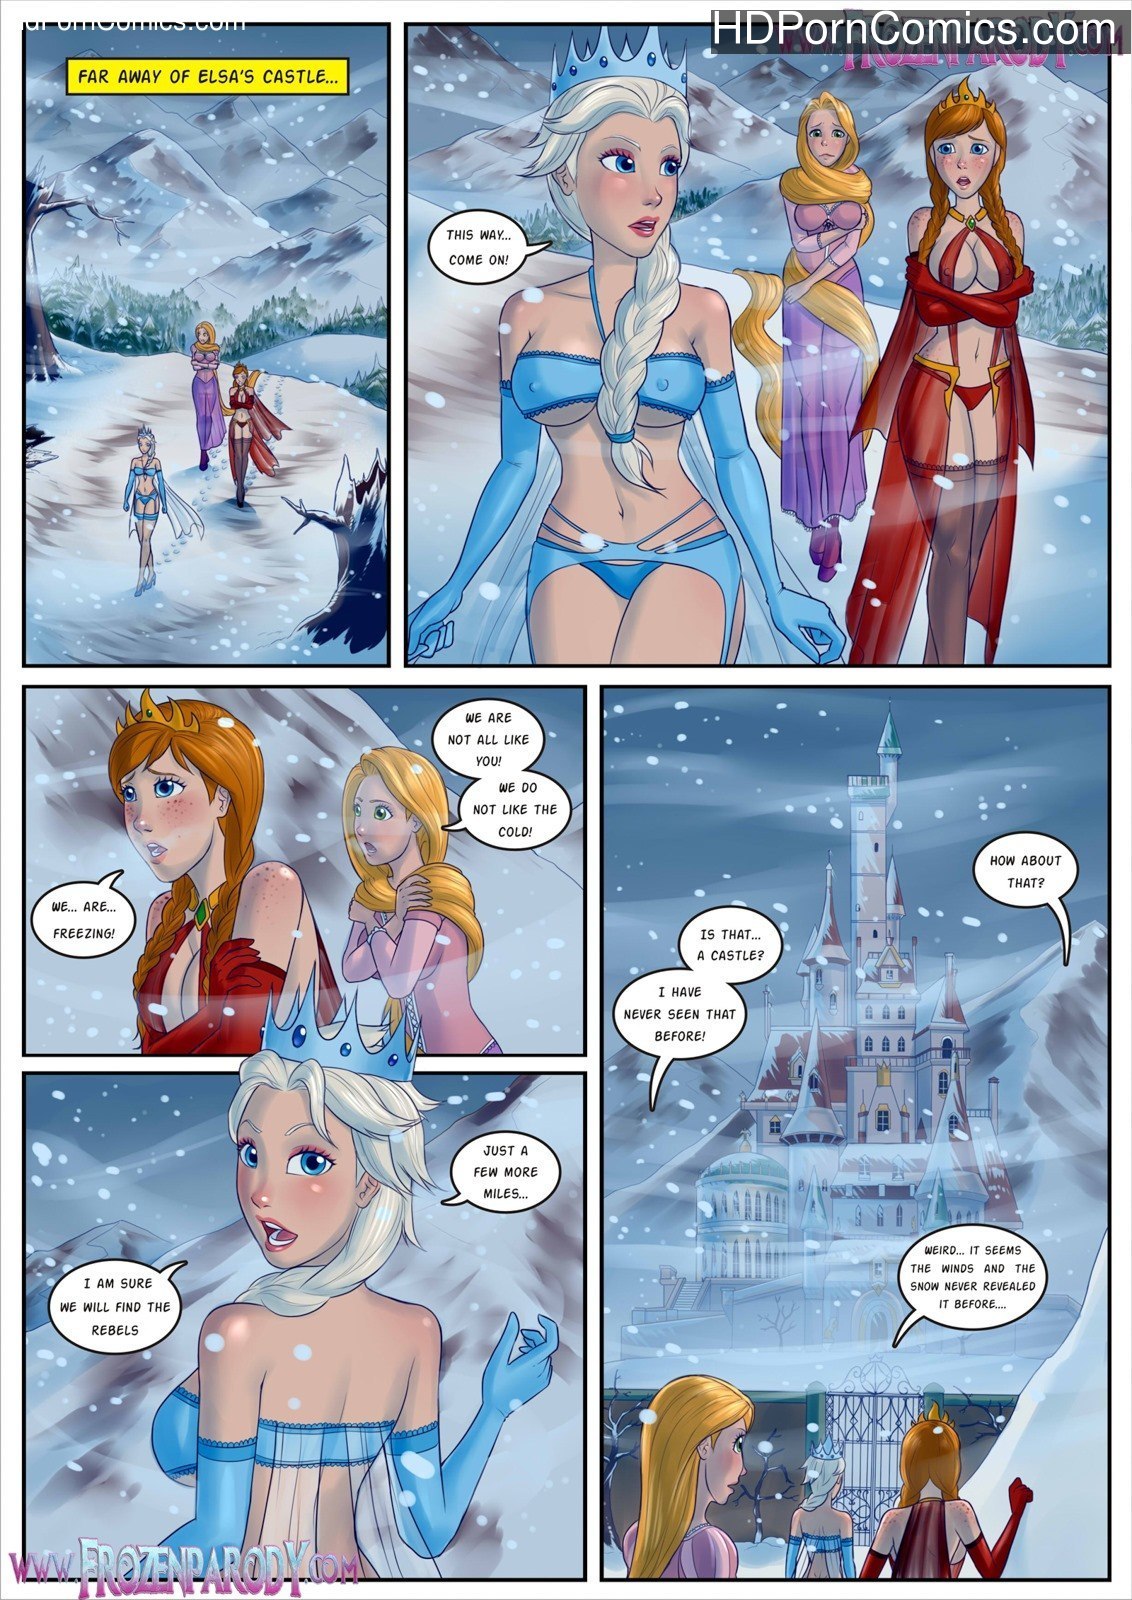 Frozen Cartoon Characters Naked - Frozen Parody 13- Beauty And Beast free Cartoon Porn Comic - HD Porn Comics